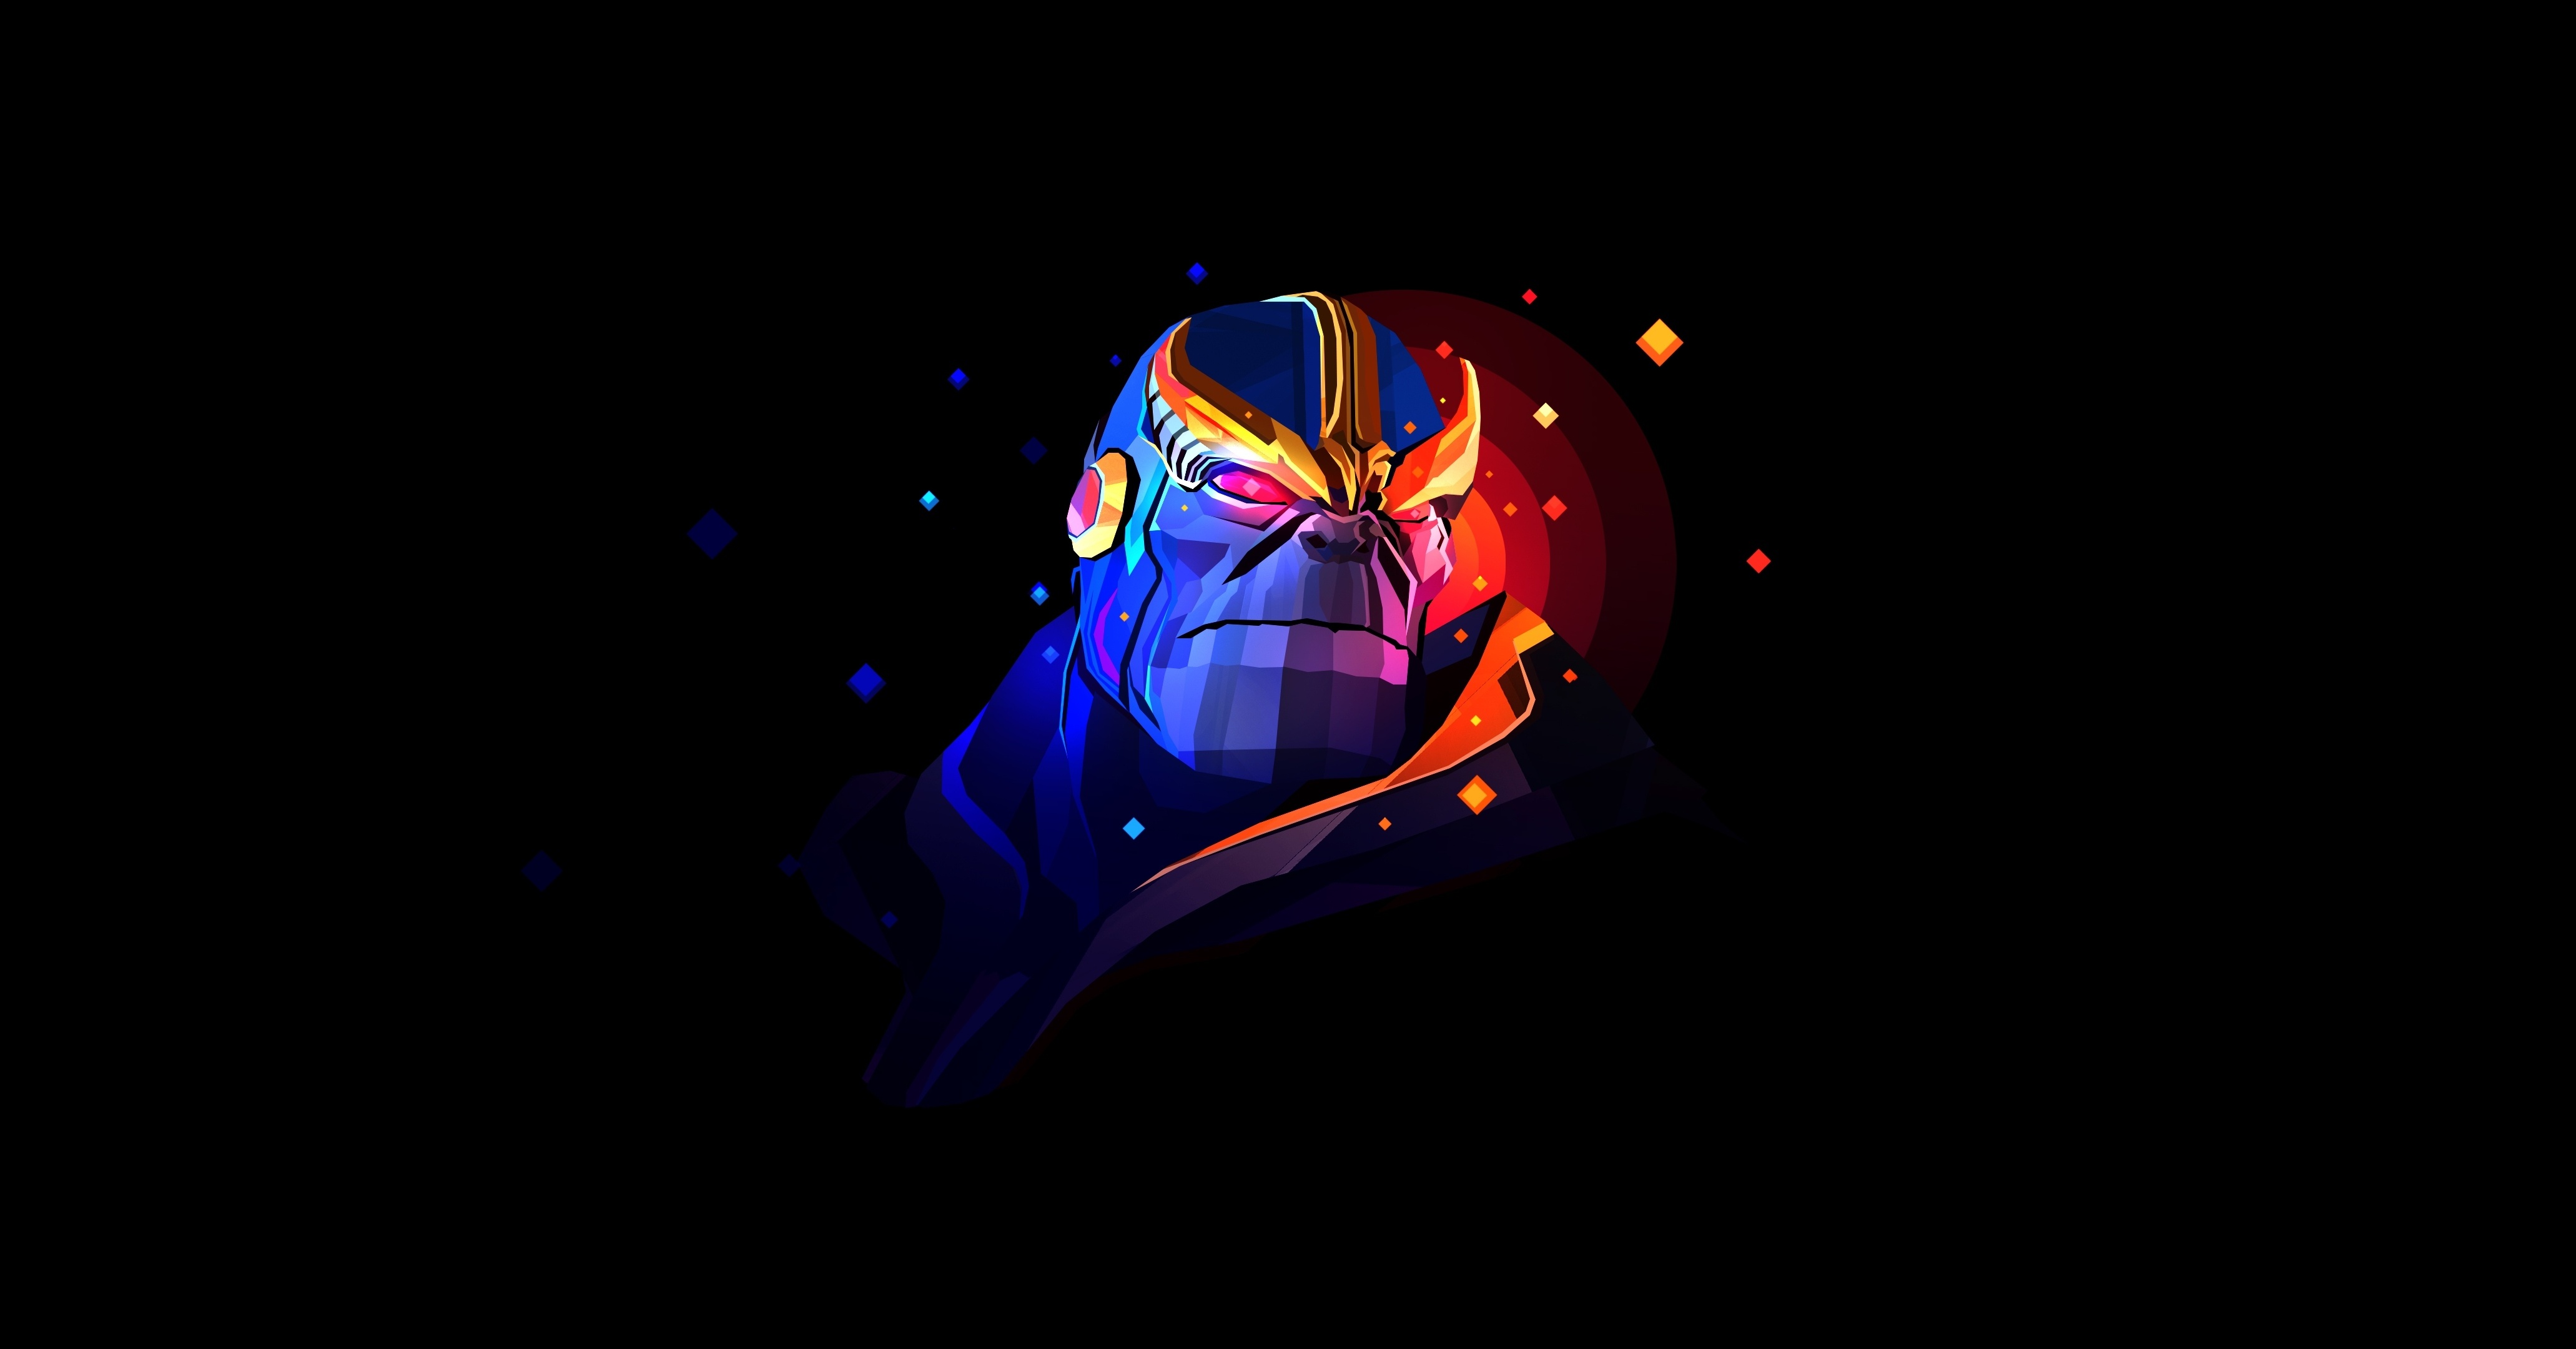 Thanos Avengers Infinity War Villain Digital Art Illustration Black Background Marvel Comics 4125x2160